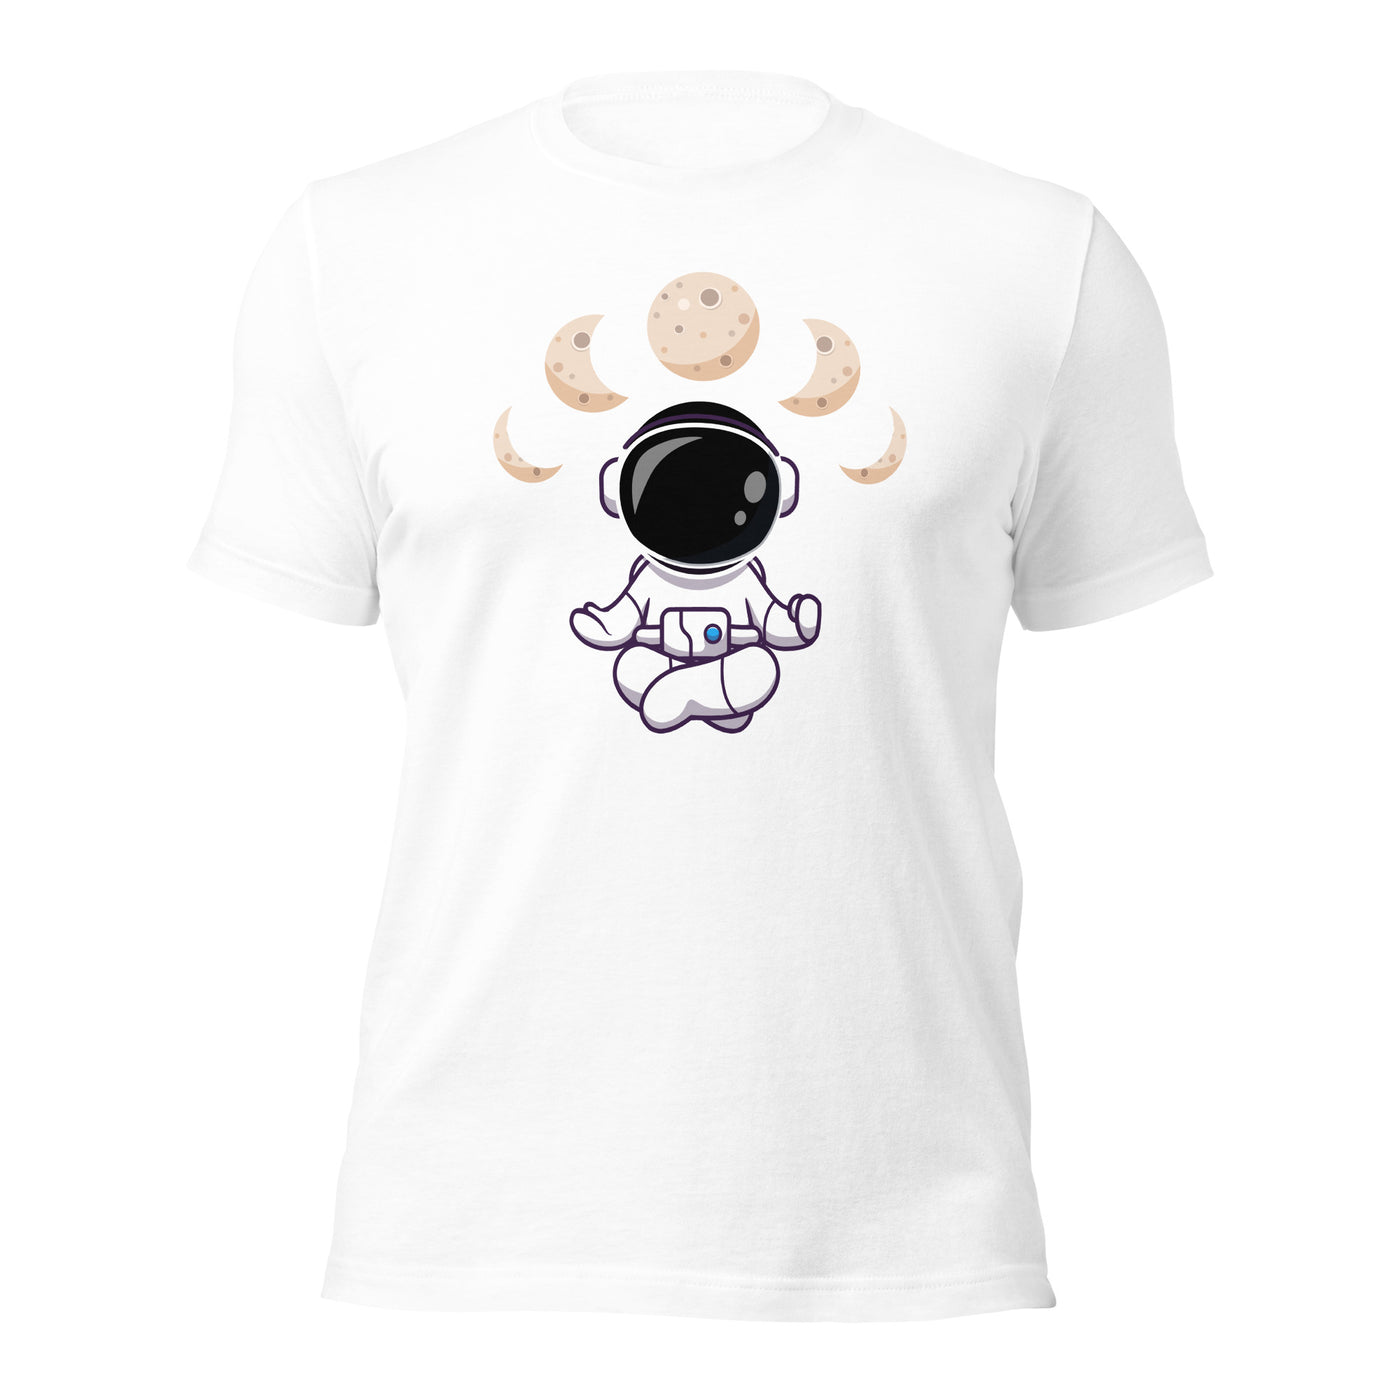 Astronaut Meditation - Unisex t-shirt